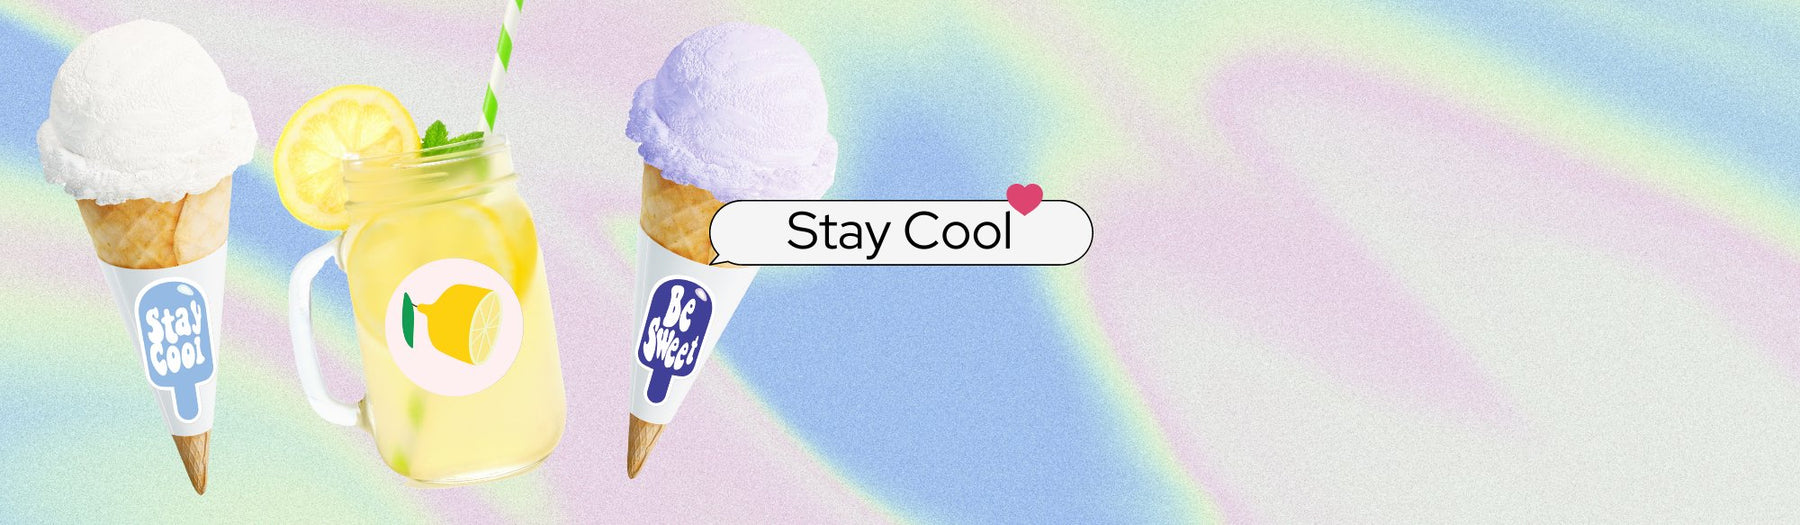 Stay Cool Sticker